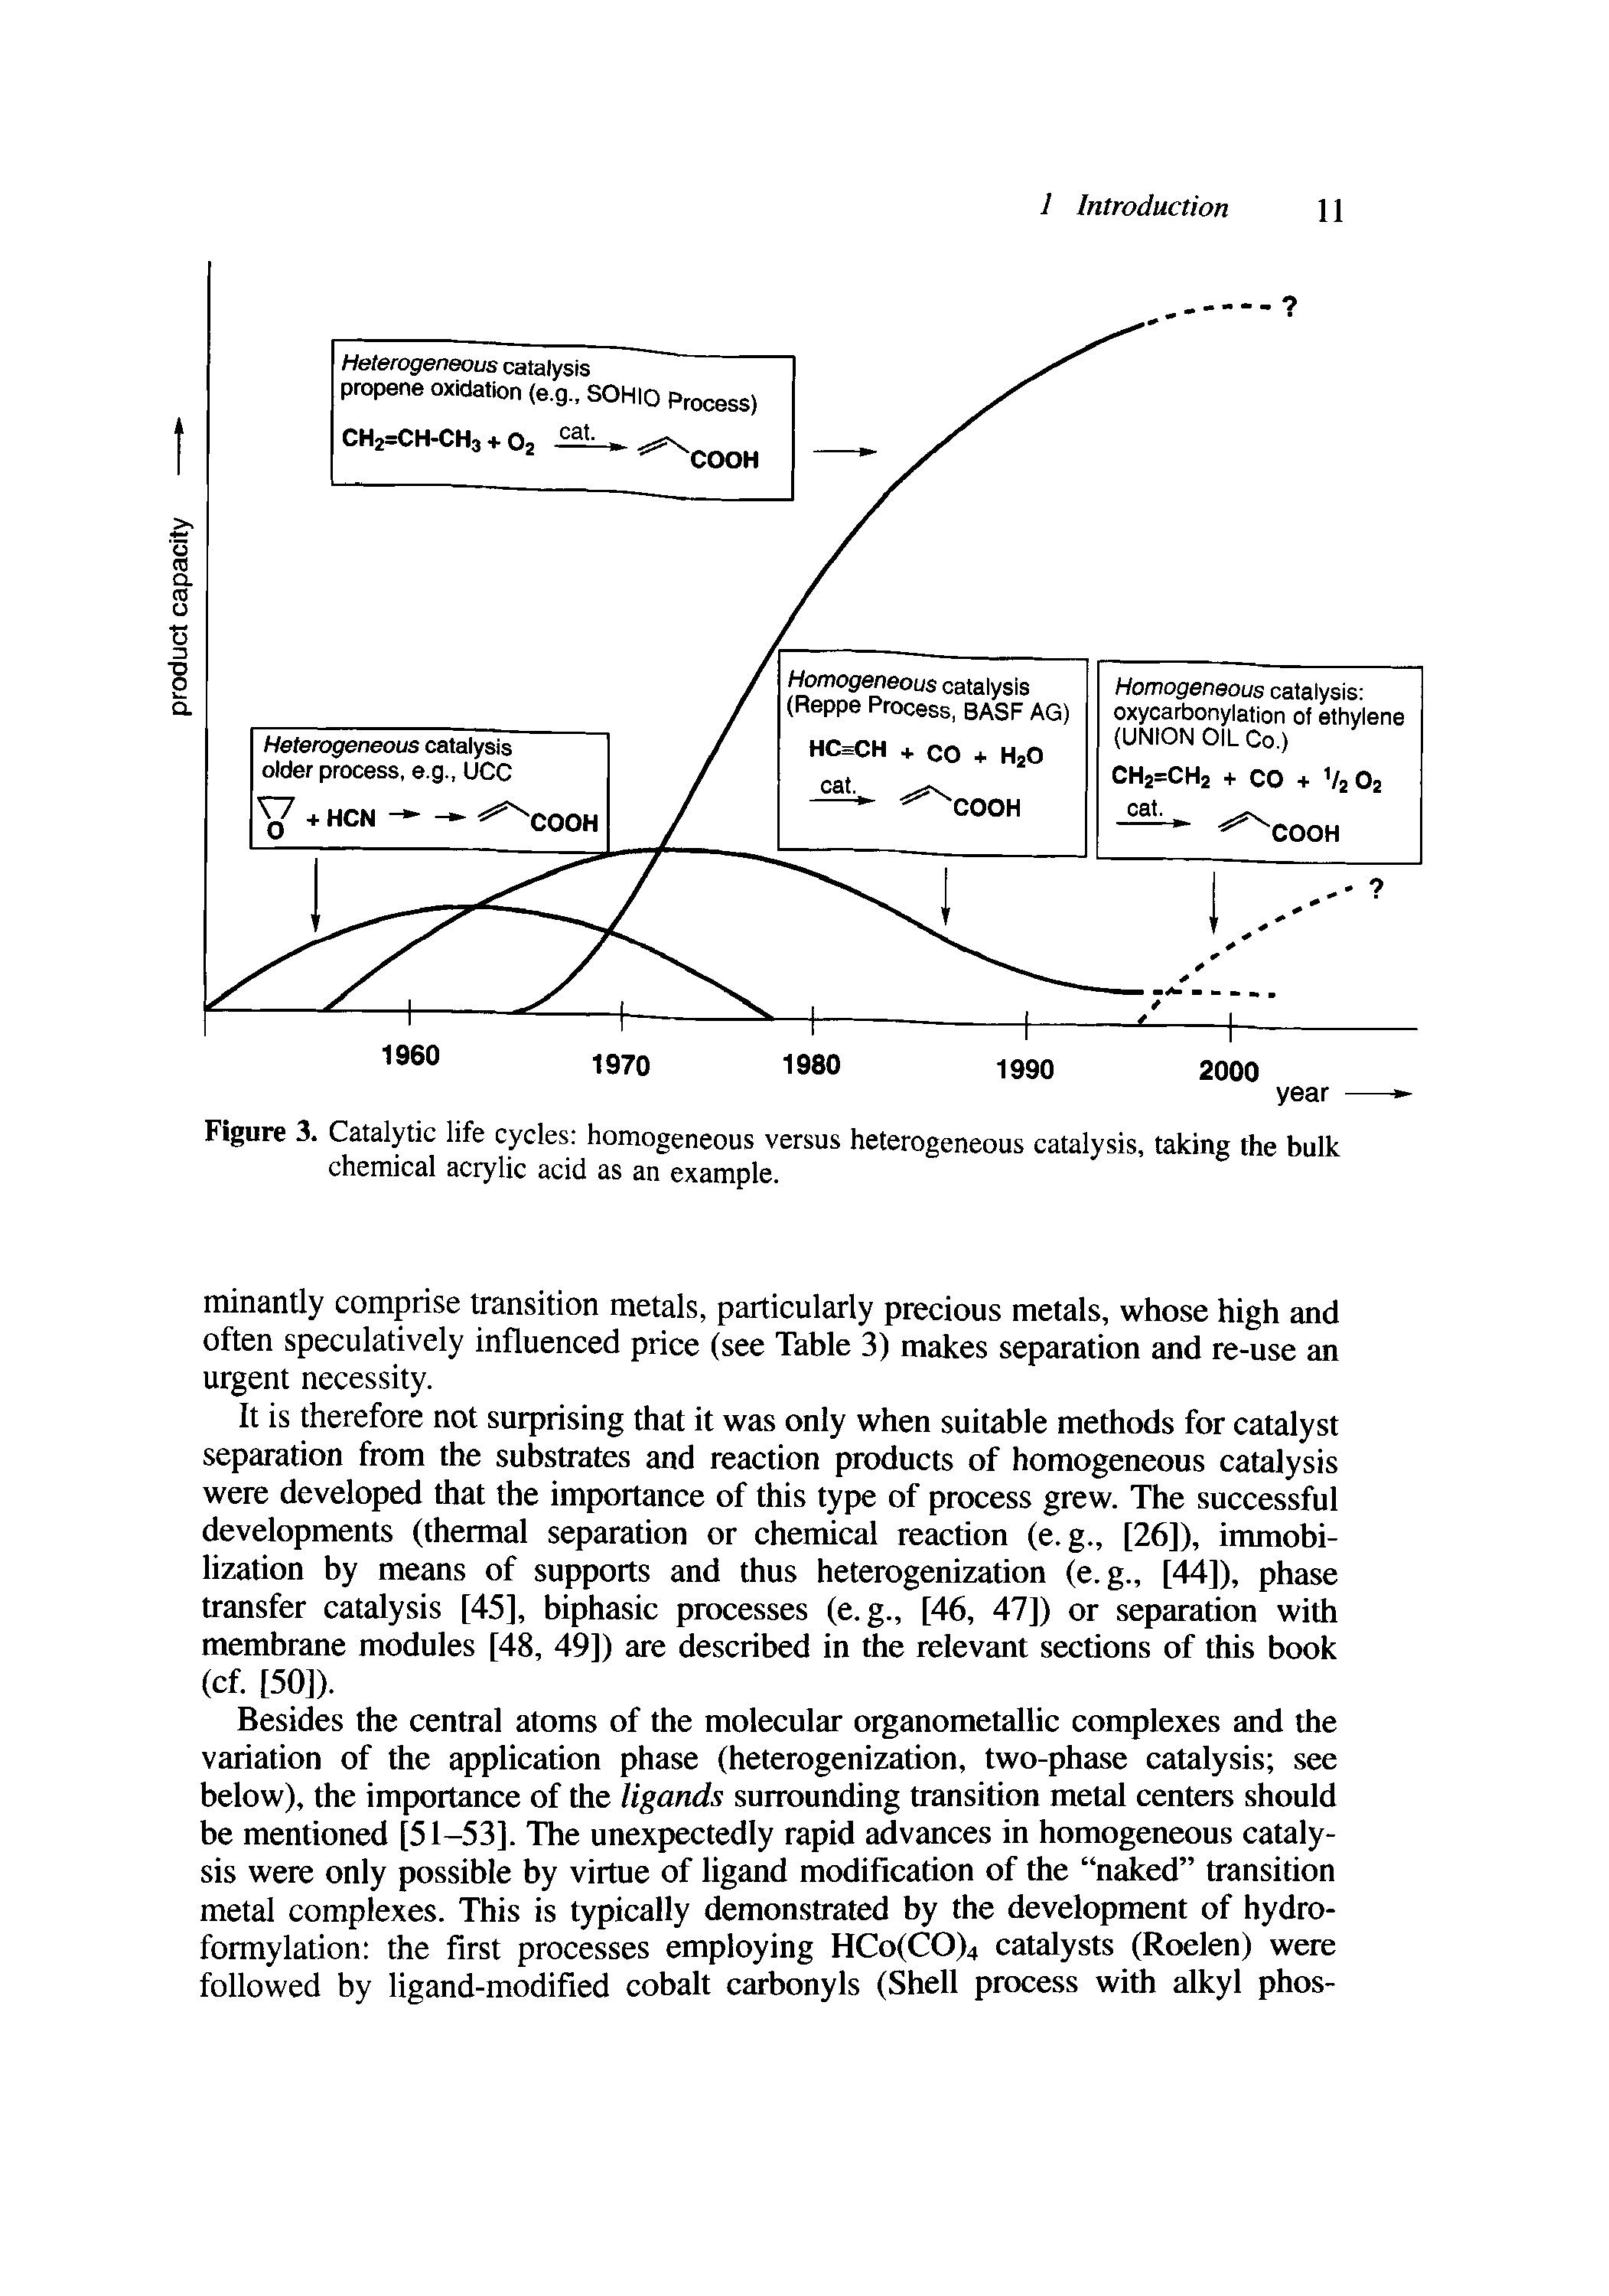 Figure 3. Catalytic life cycles homogeneous versus heterogeneous catalysis, taking the bulk chemical acrylic acid as an example.